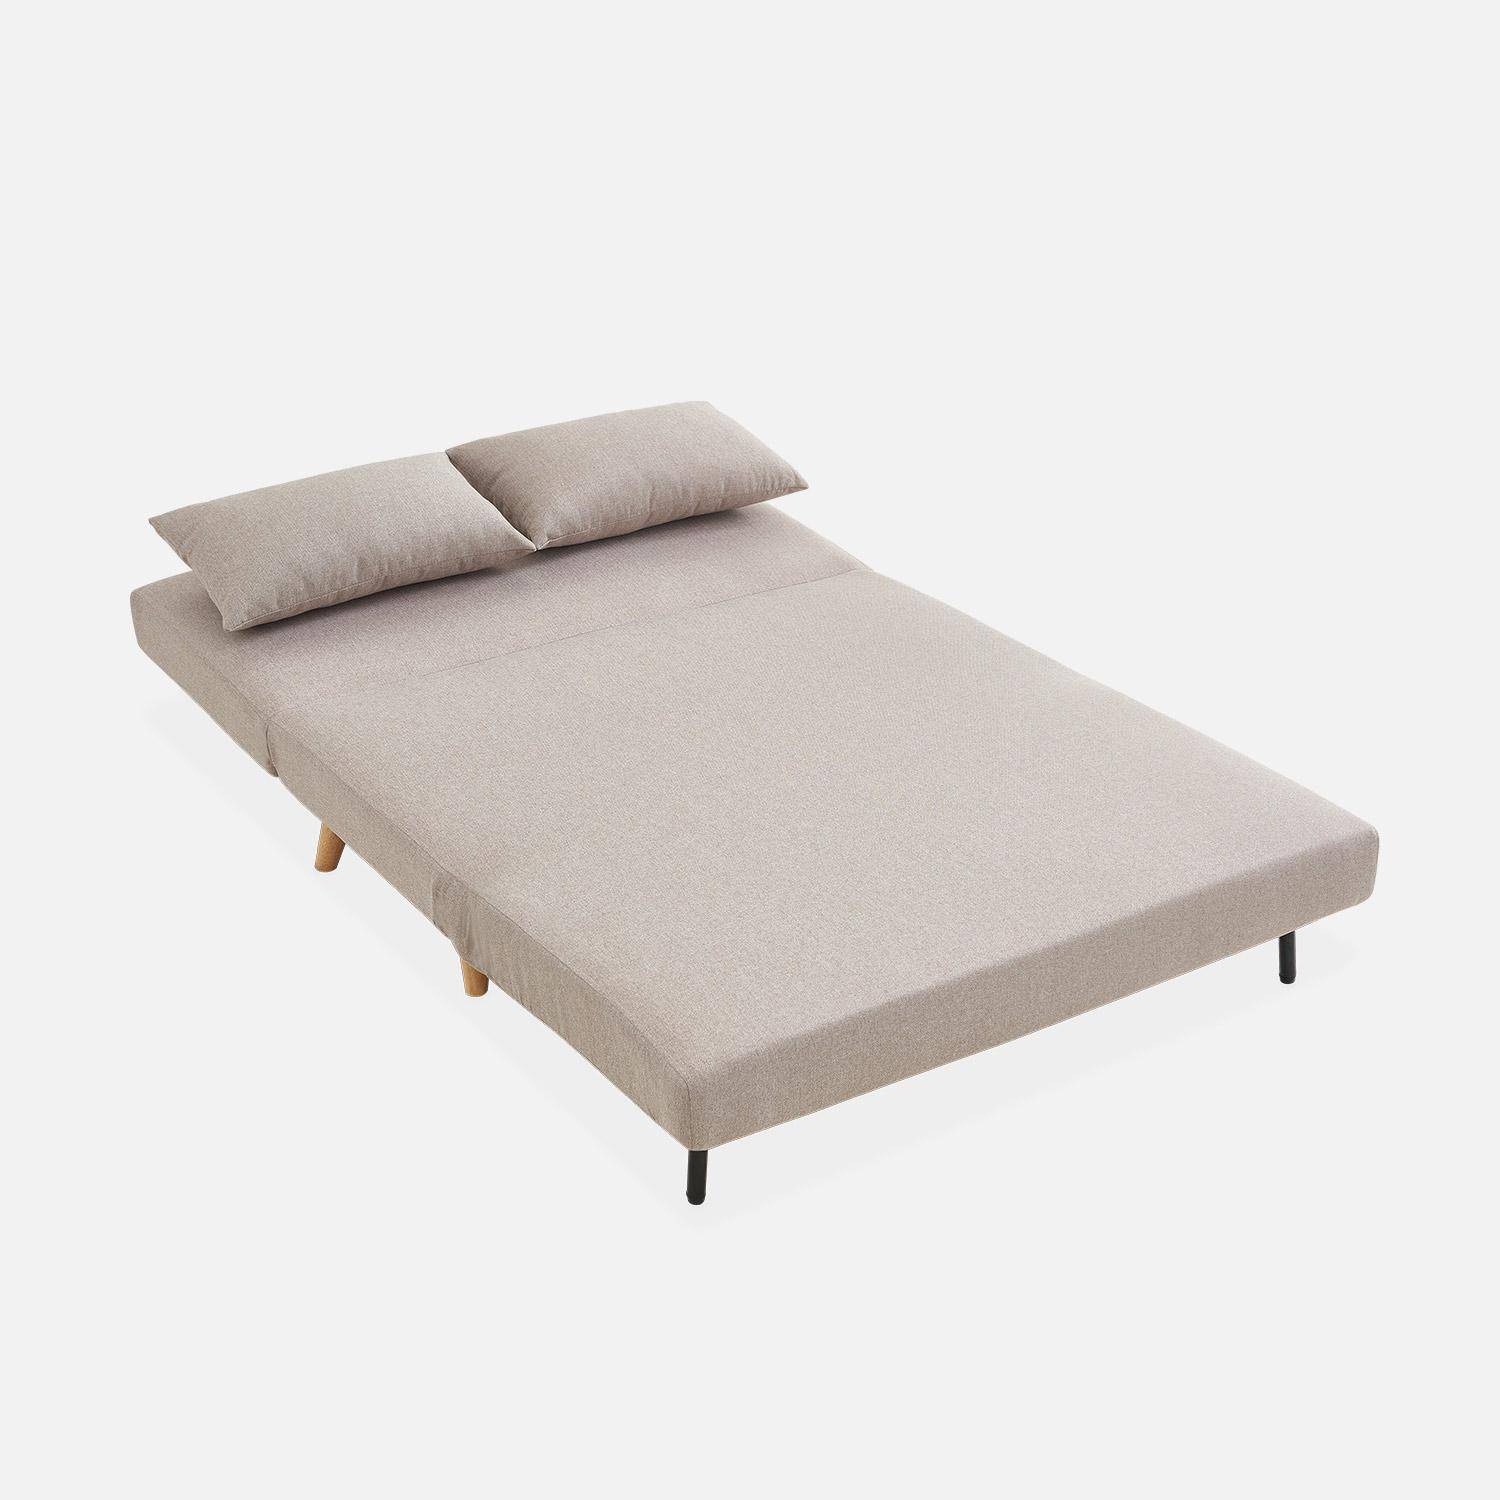 Sleeper, 2-Seater Convertible Sofa, L120xW 81xH82cm, beige Photo7